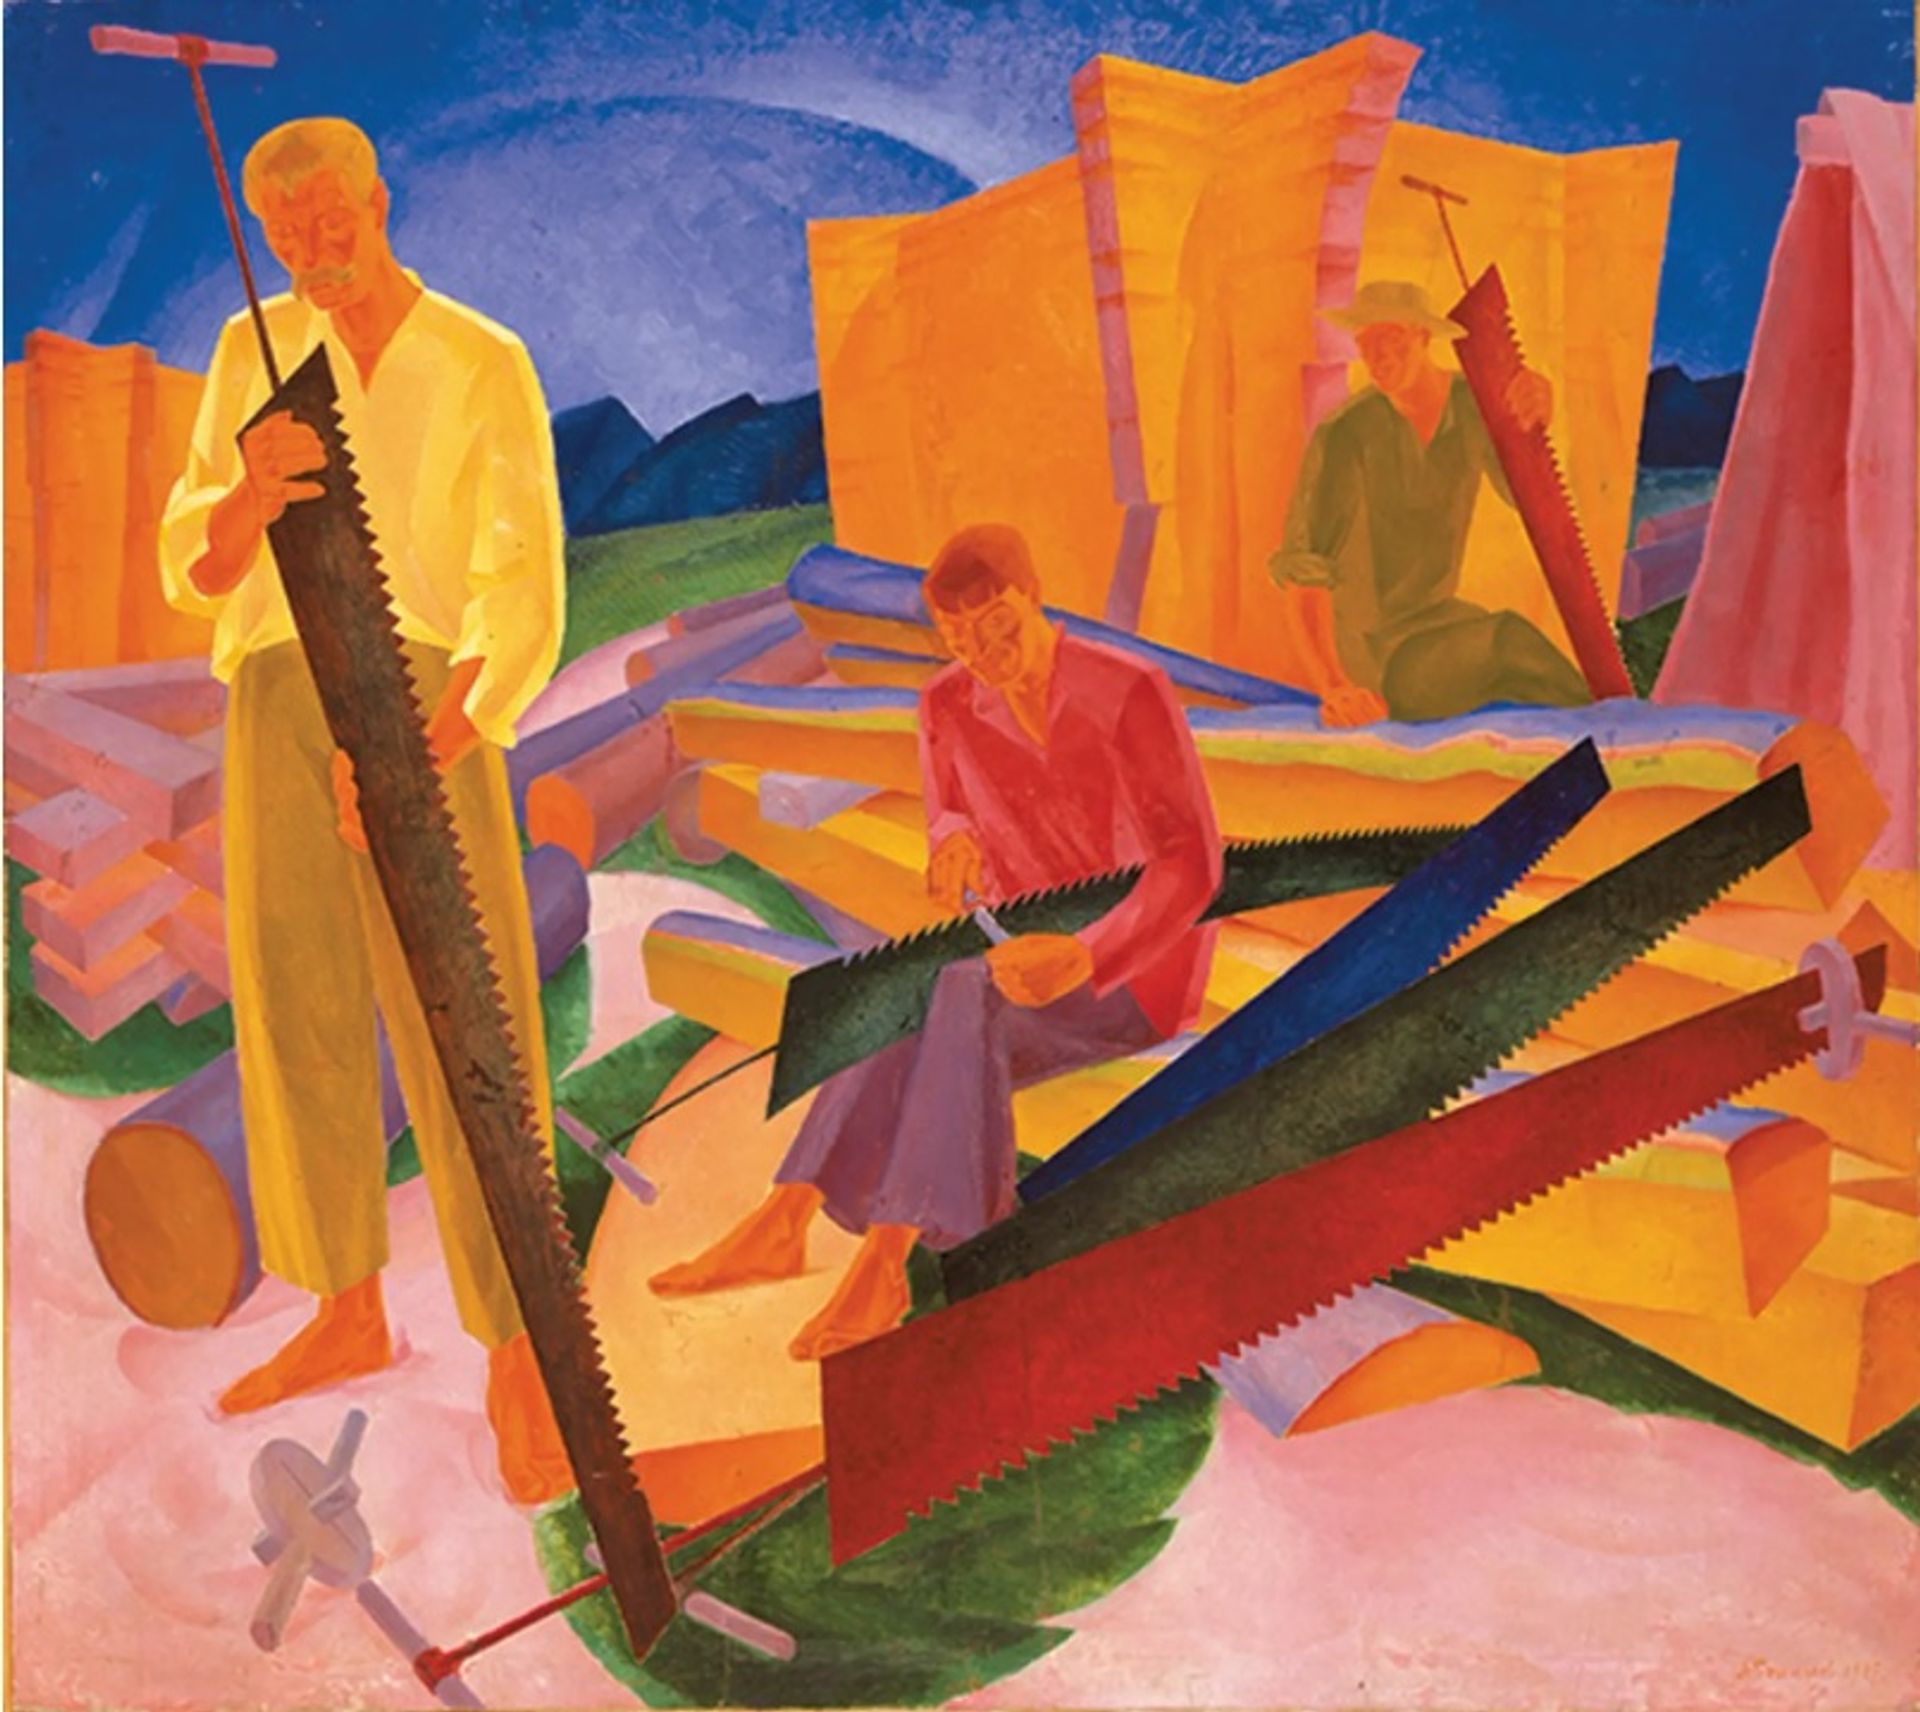 Sharpening the Saws (around 1927) של אולכסנדר בוהומאזוב הוא חלק מהתערוכה

באדיבות "המוזיאון הלאומי לאמנות" של אוקראינה